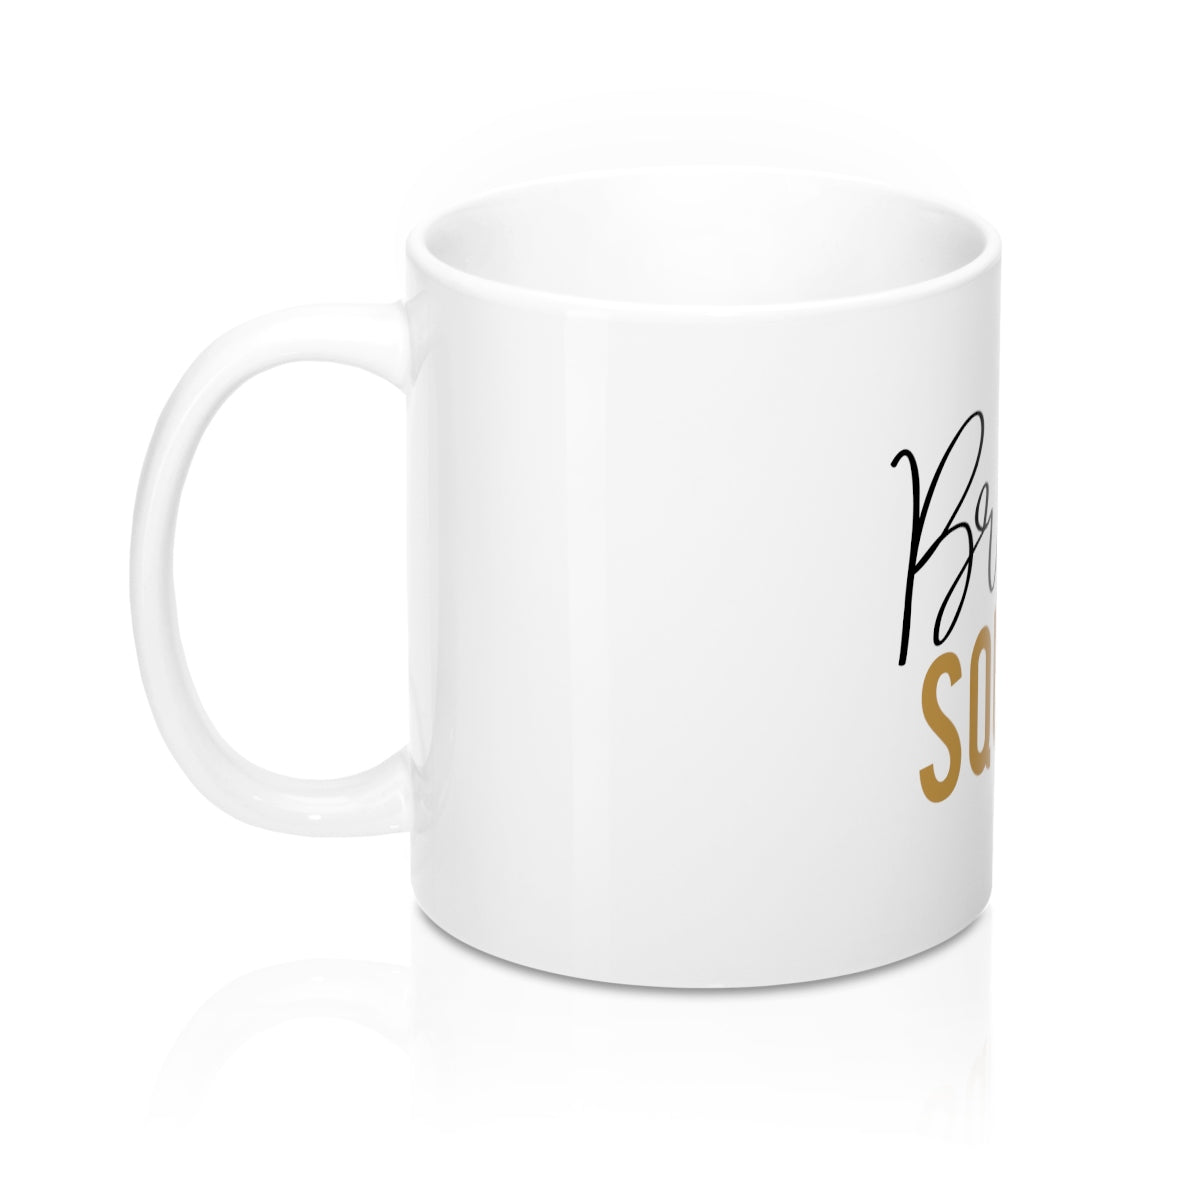 Bride Squad 11oz Ceramic Mug - Inspired By Savy